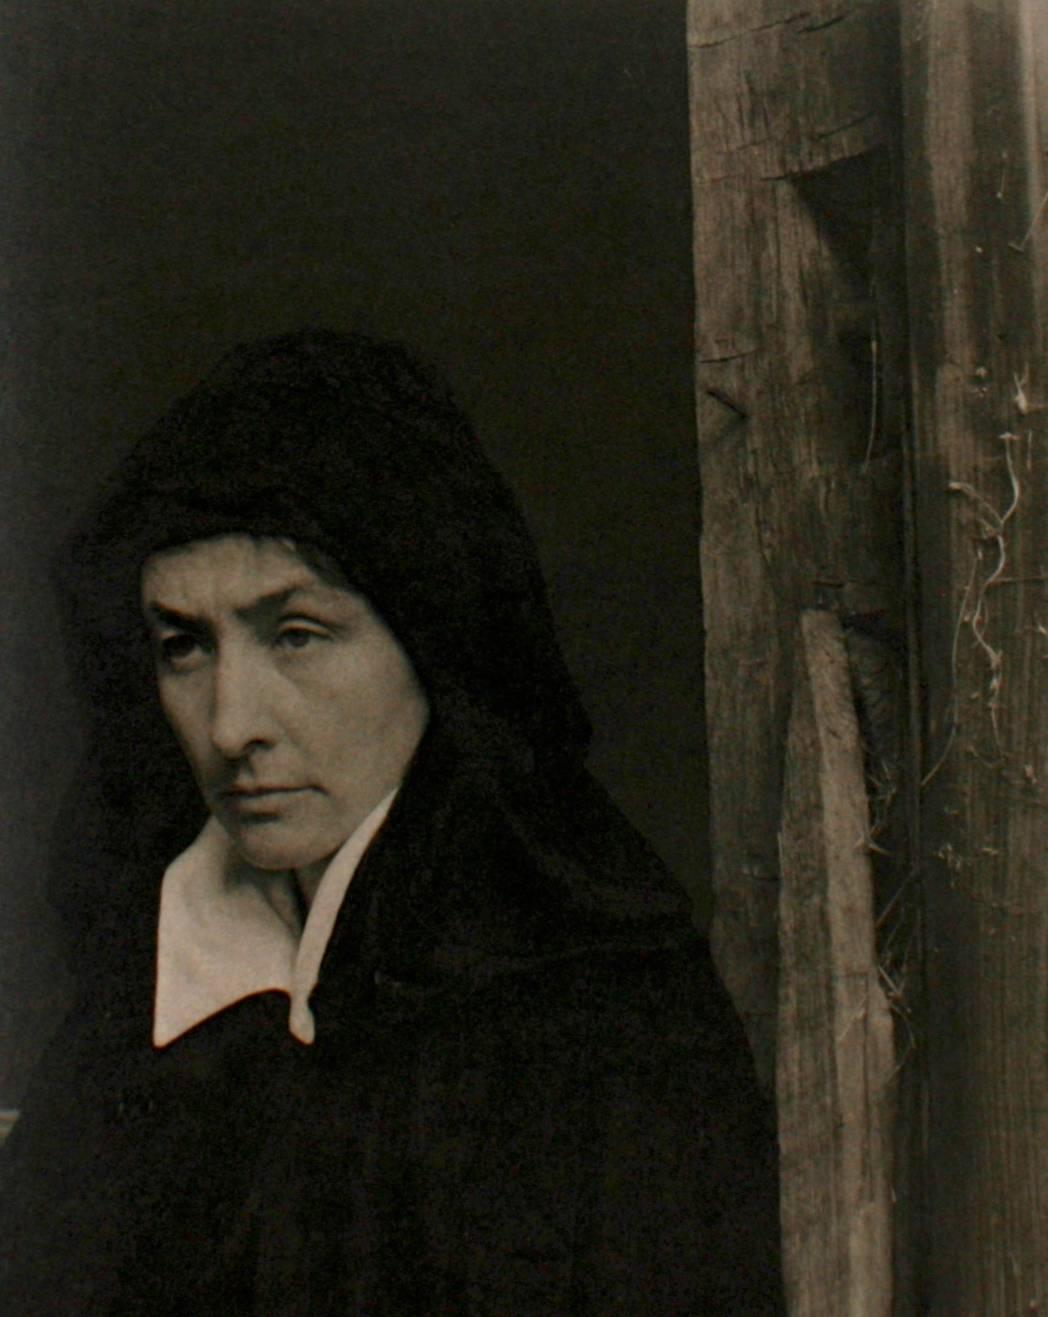 Late 20th Century “Georgia O'Keeffe” A Portrait by Alfred Stieglitz and Georgia O'Keeffe